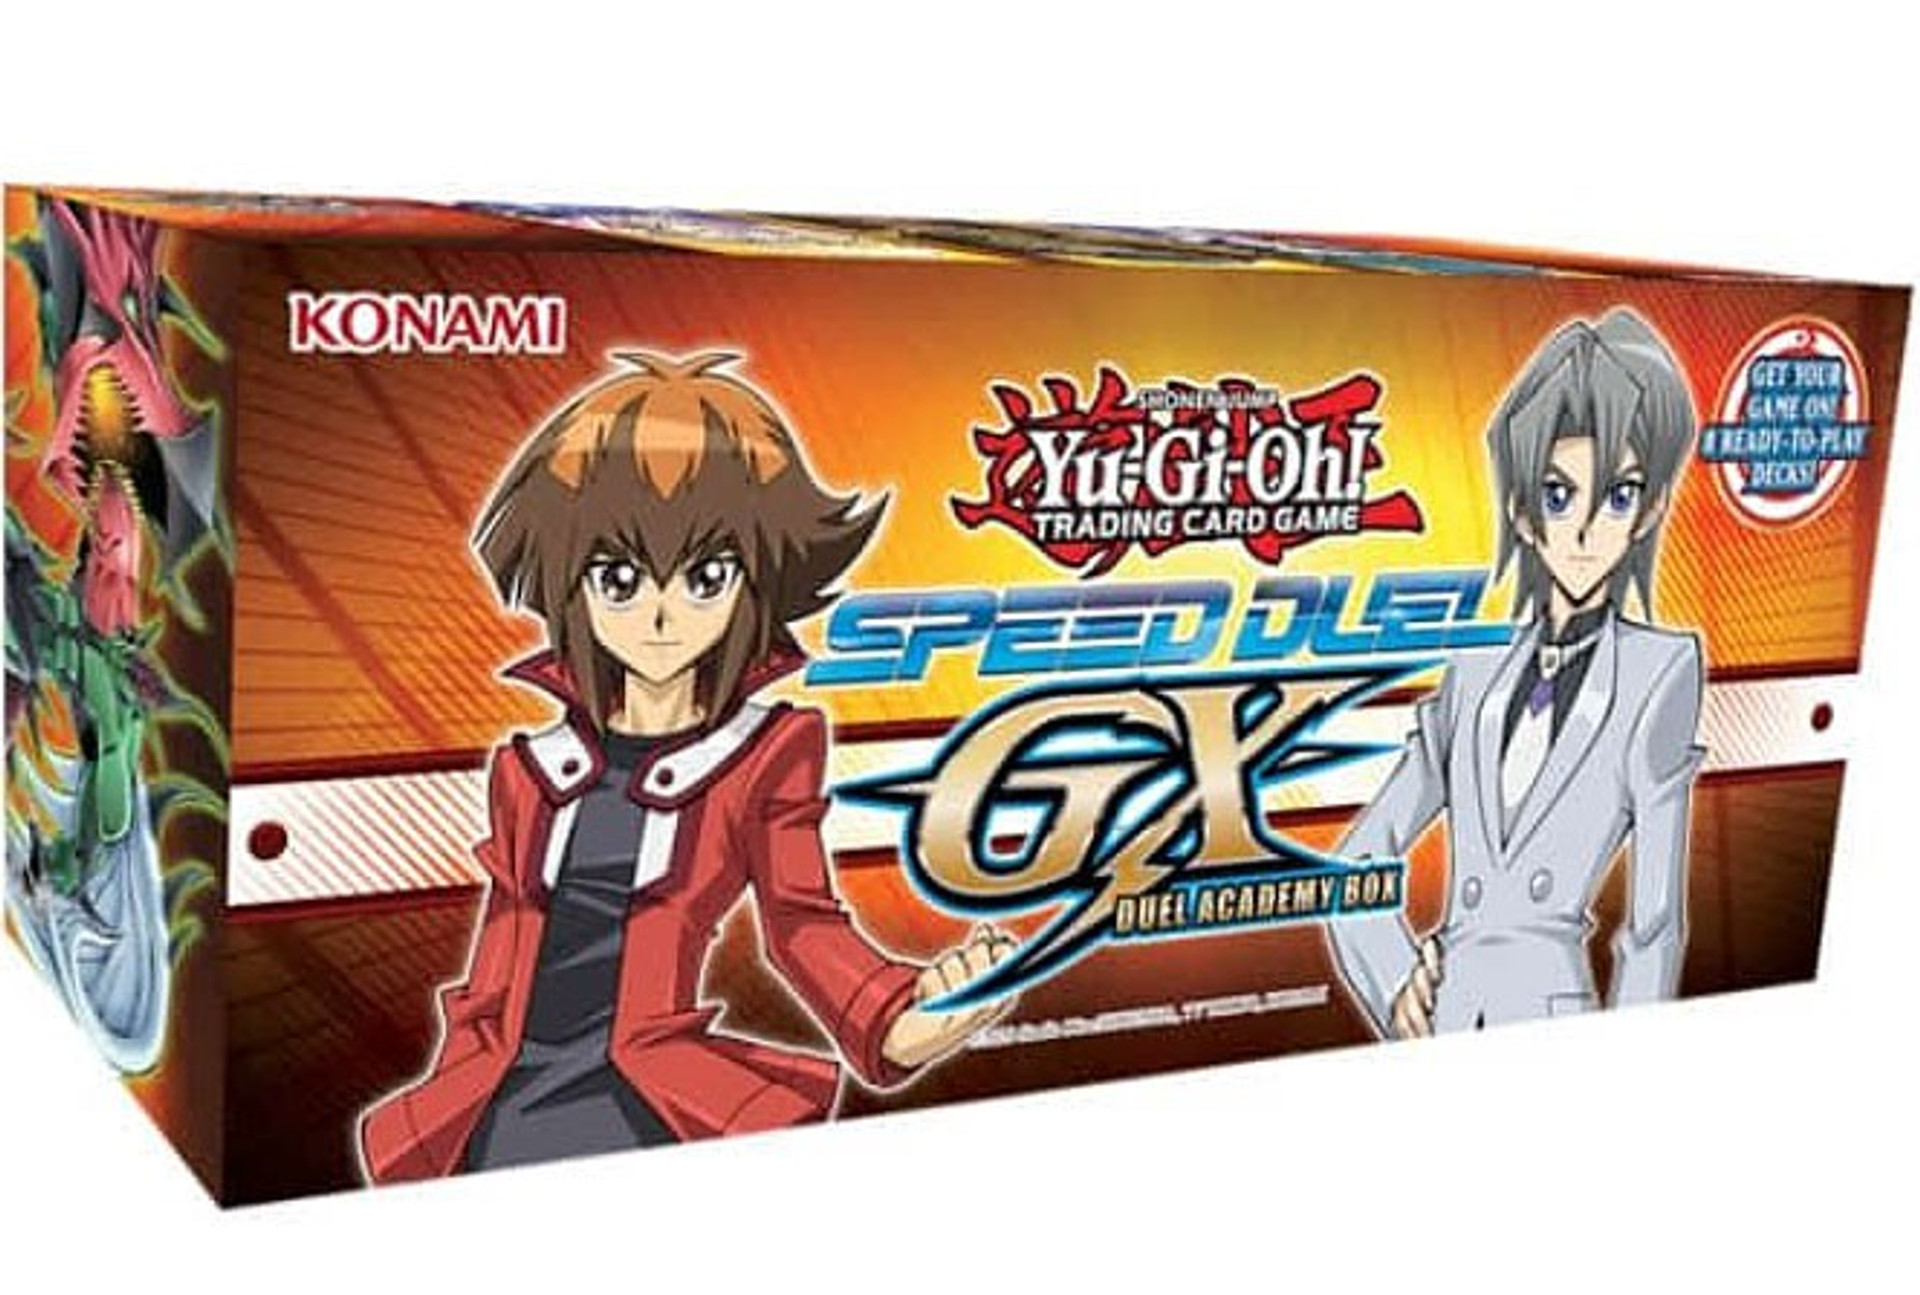 yugioh-trading-card-game-speed-duel-gx-duel-academy-box-set-8-complete-decks-konami-toywiz